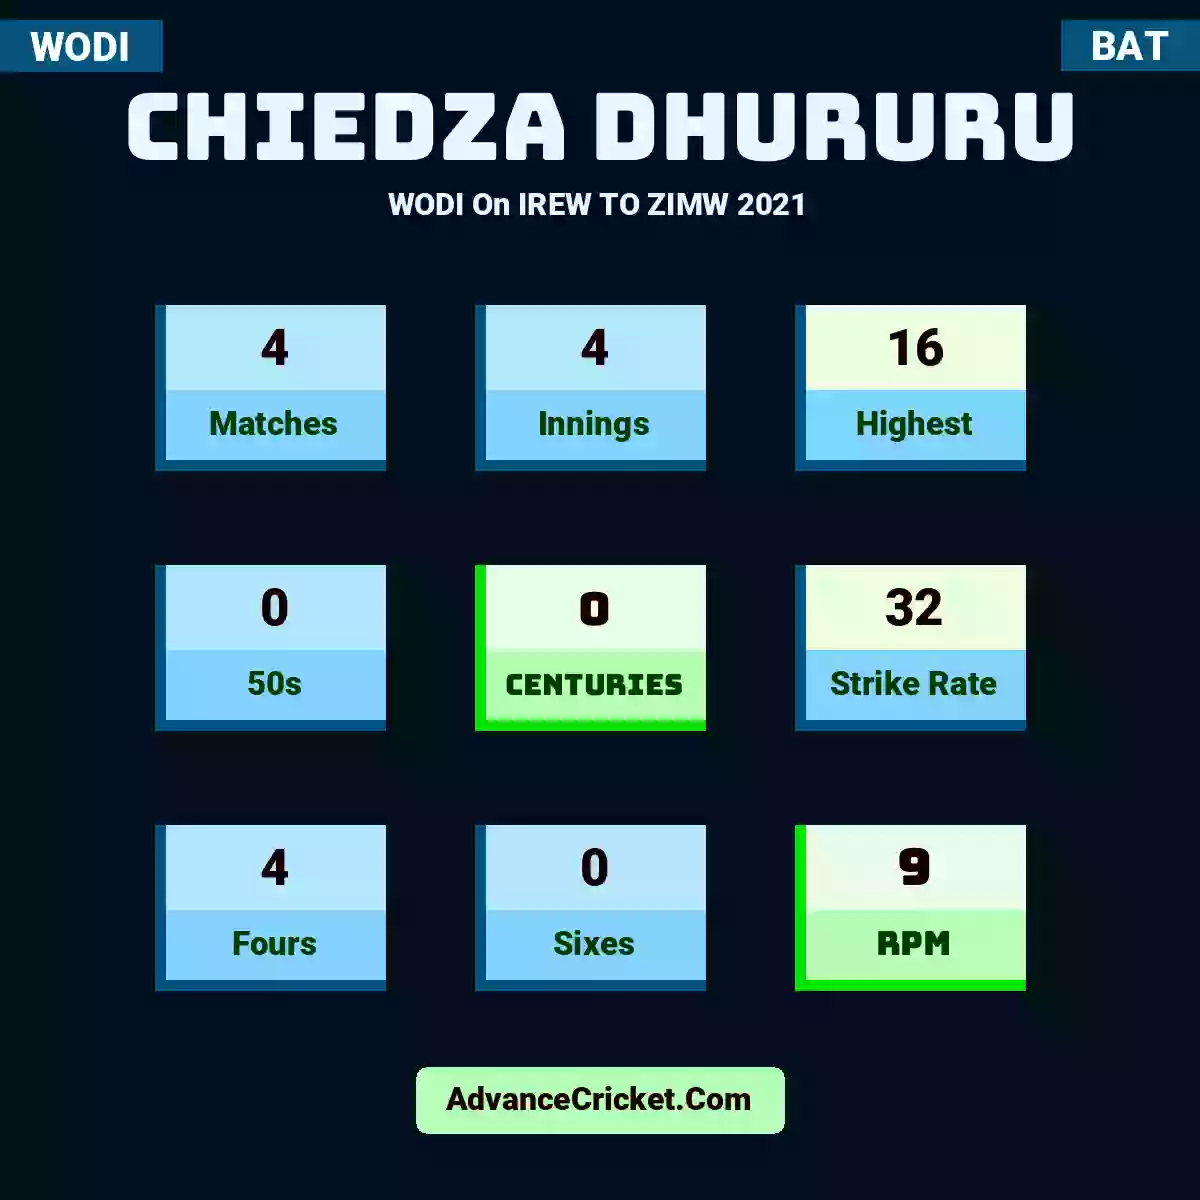 Chiedza Dhururu WODI  On IREW TO ZIMW 2021, Chiedza Dhururu played 4 matches, scored 16 runs as highest, 0 half-centuries, and 0 centuries, with a strike rate of 32. C.Dhururu hit 4 fours and 0 sixes, with an RPM of 9.